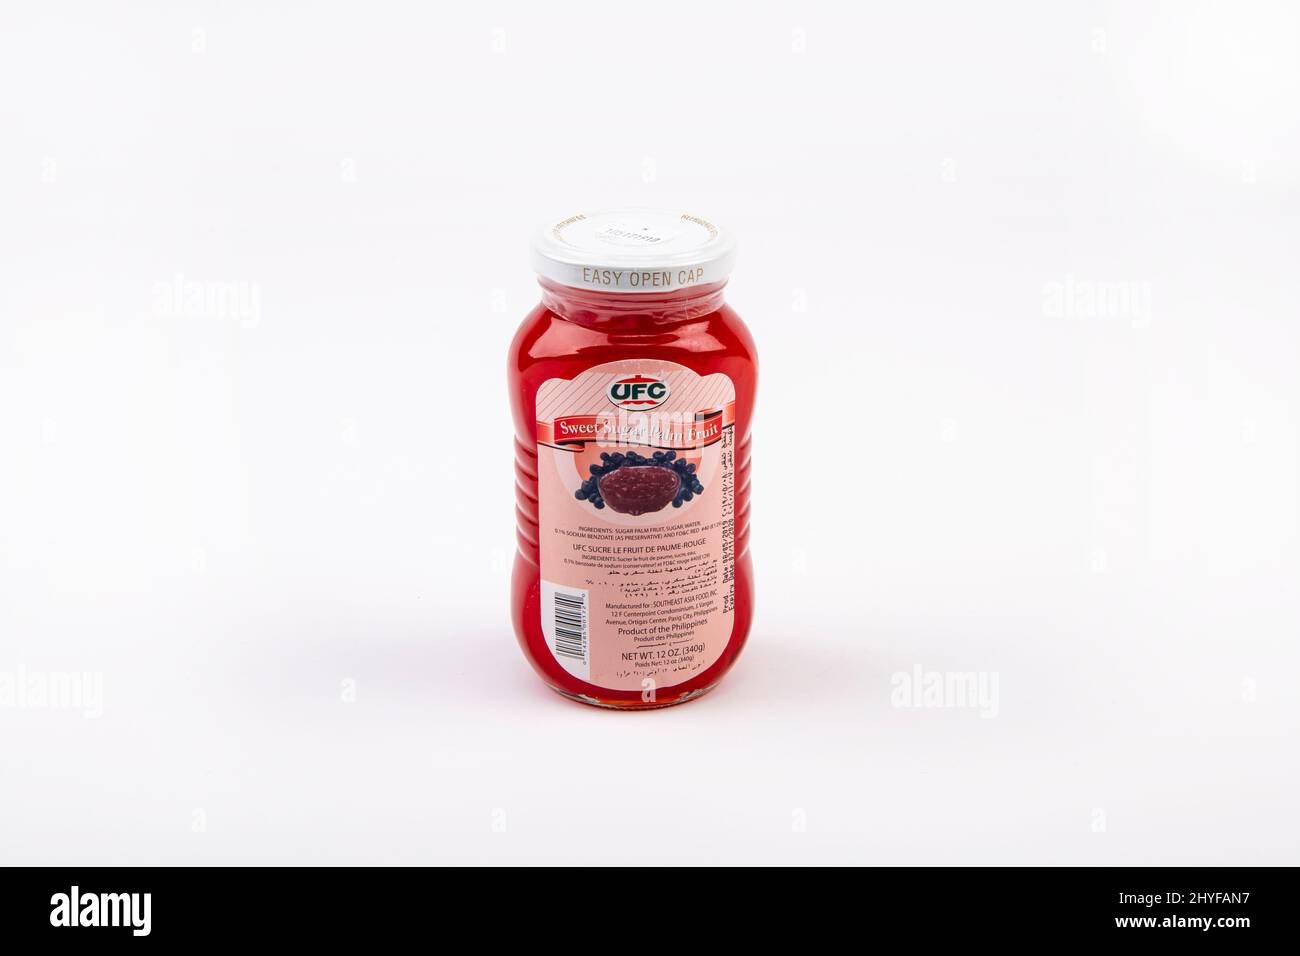 UFC Sweet Sugar Palm Fruit bottiglia da 340g vasetti su bianco Foto Stock